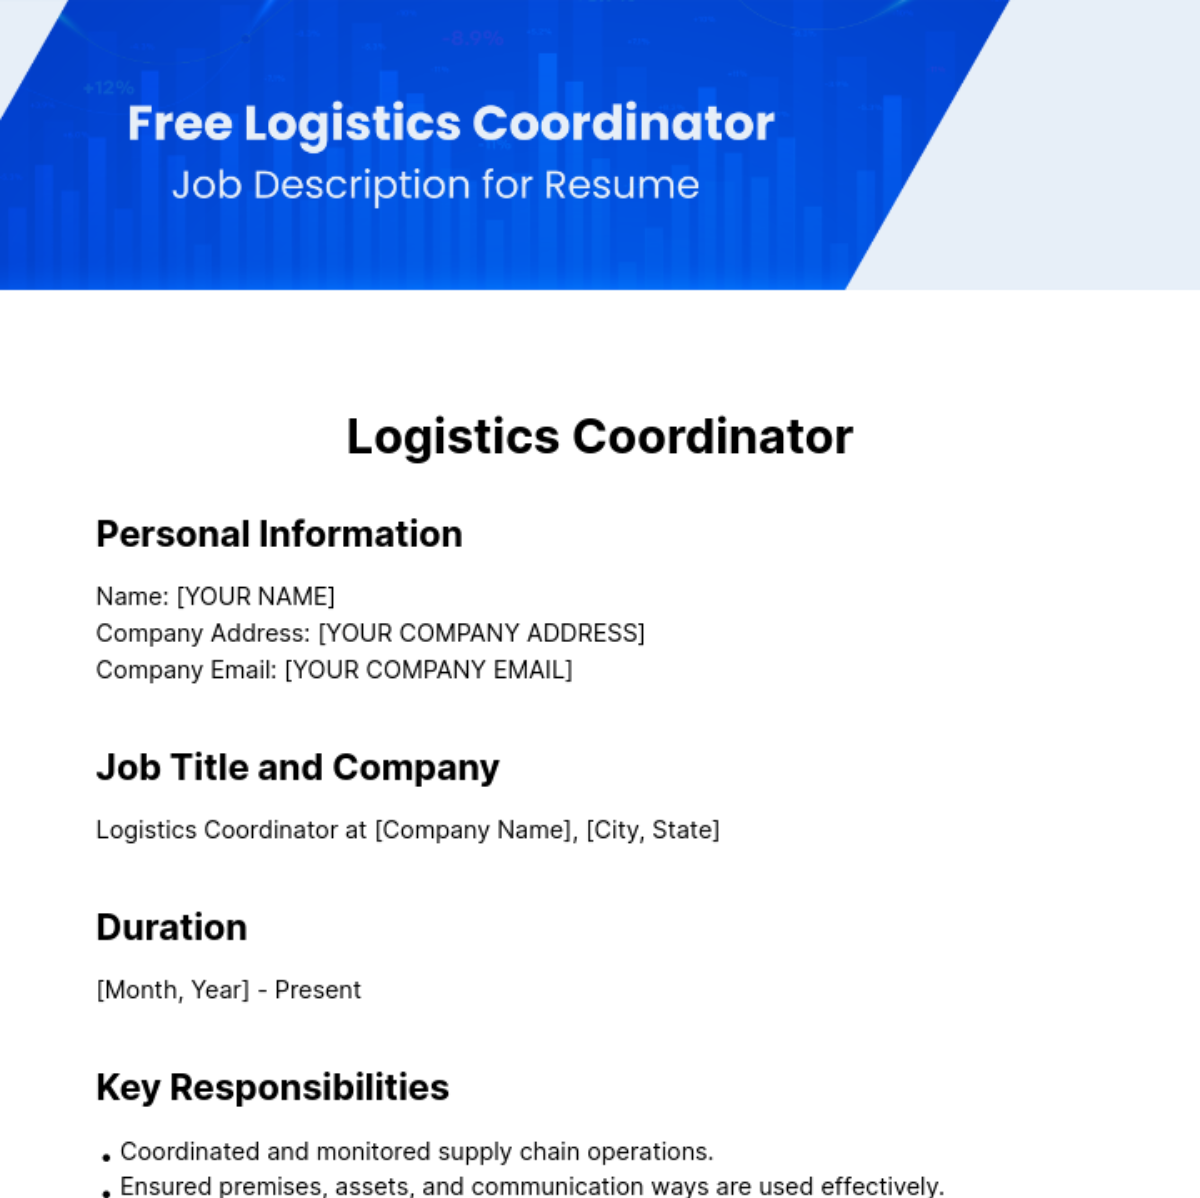 Free Logistics Coordinator Job Description for Resume Template